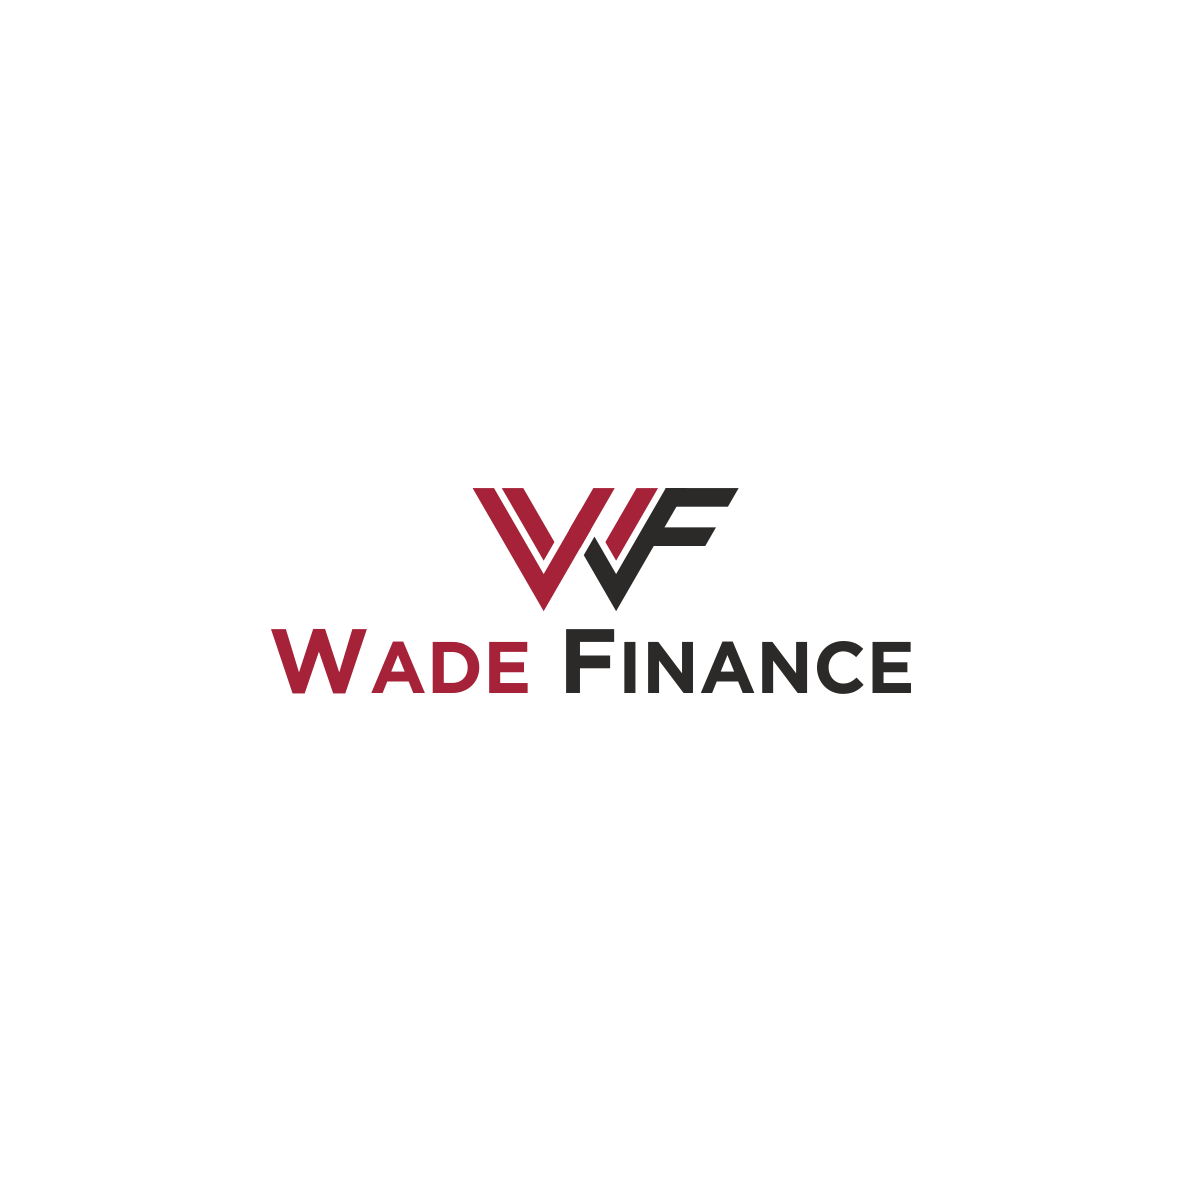 Wade Logo - House Logo Design for Wade Finance Ltd or initials use